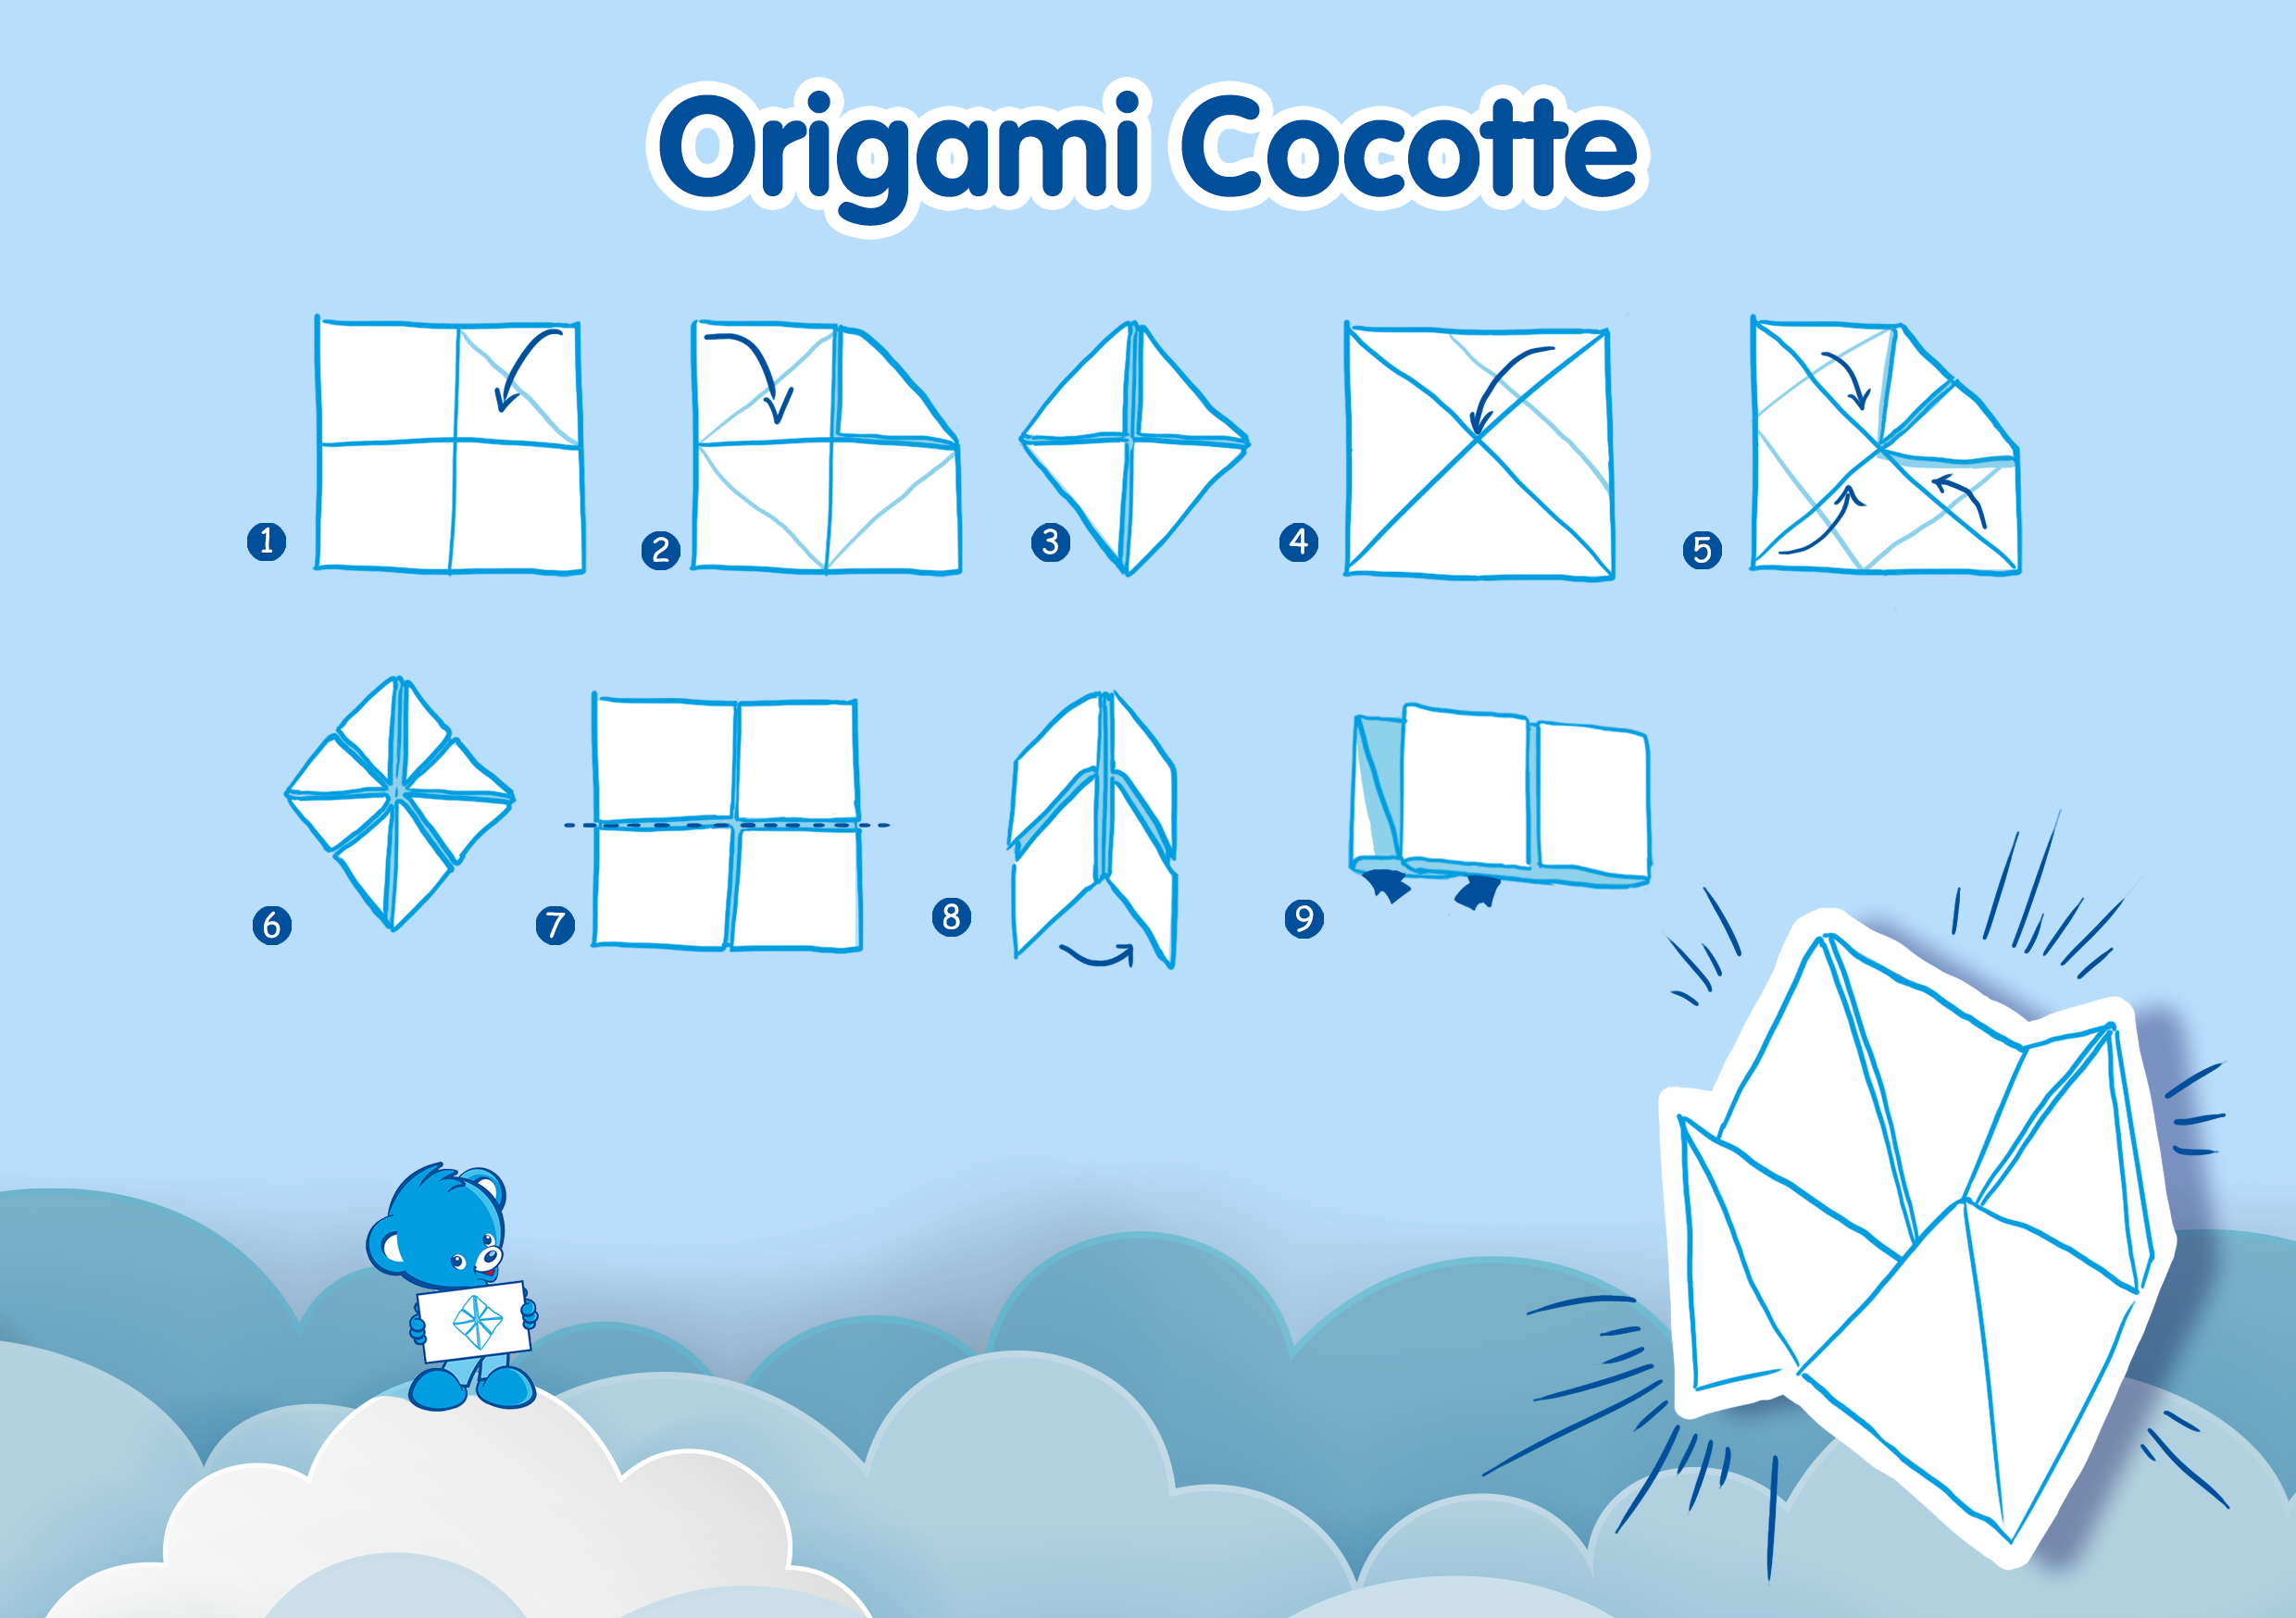 Origami Cocotte